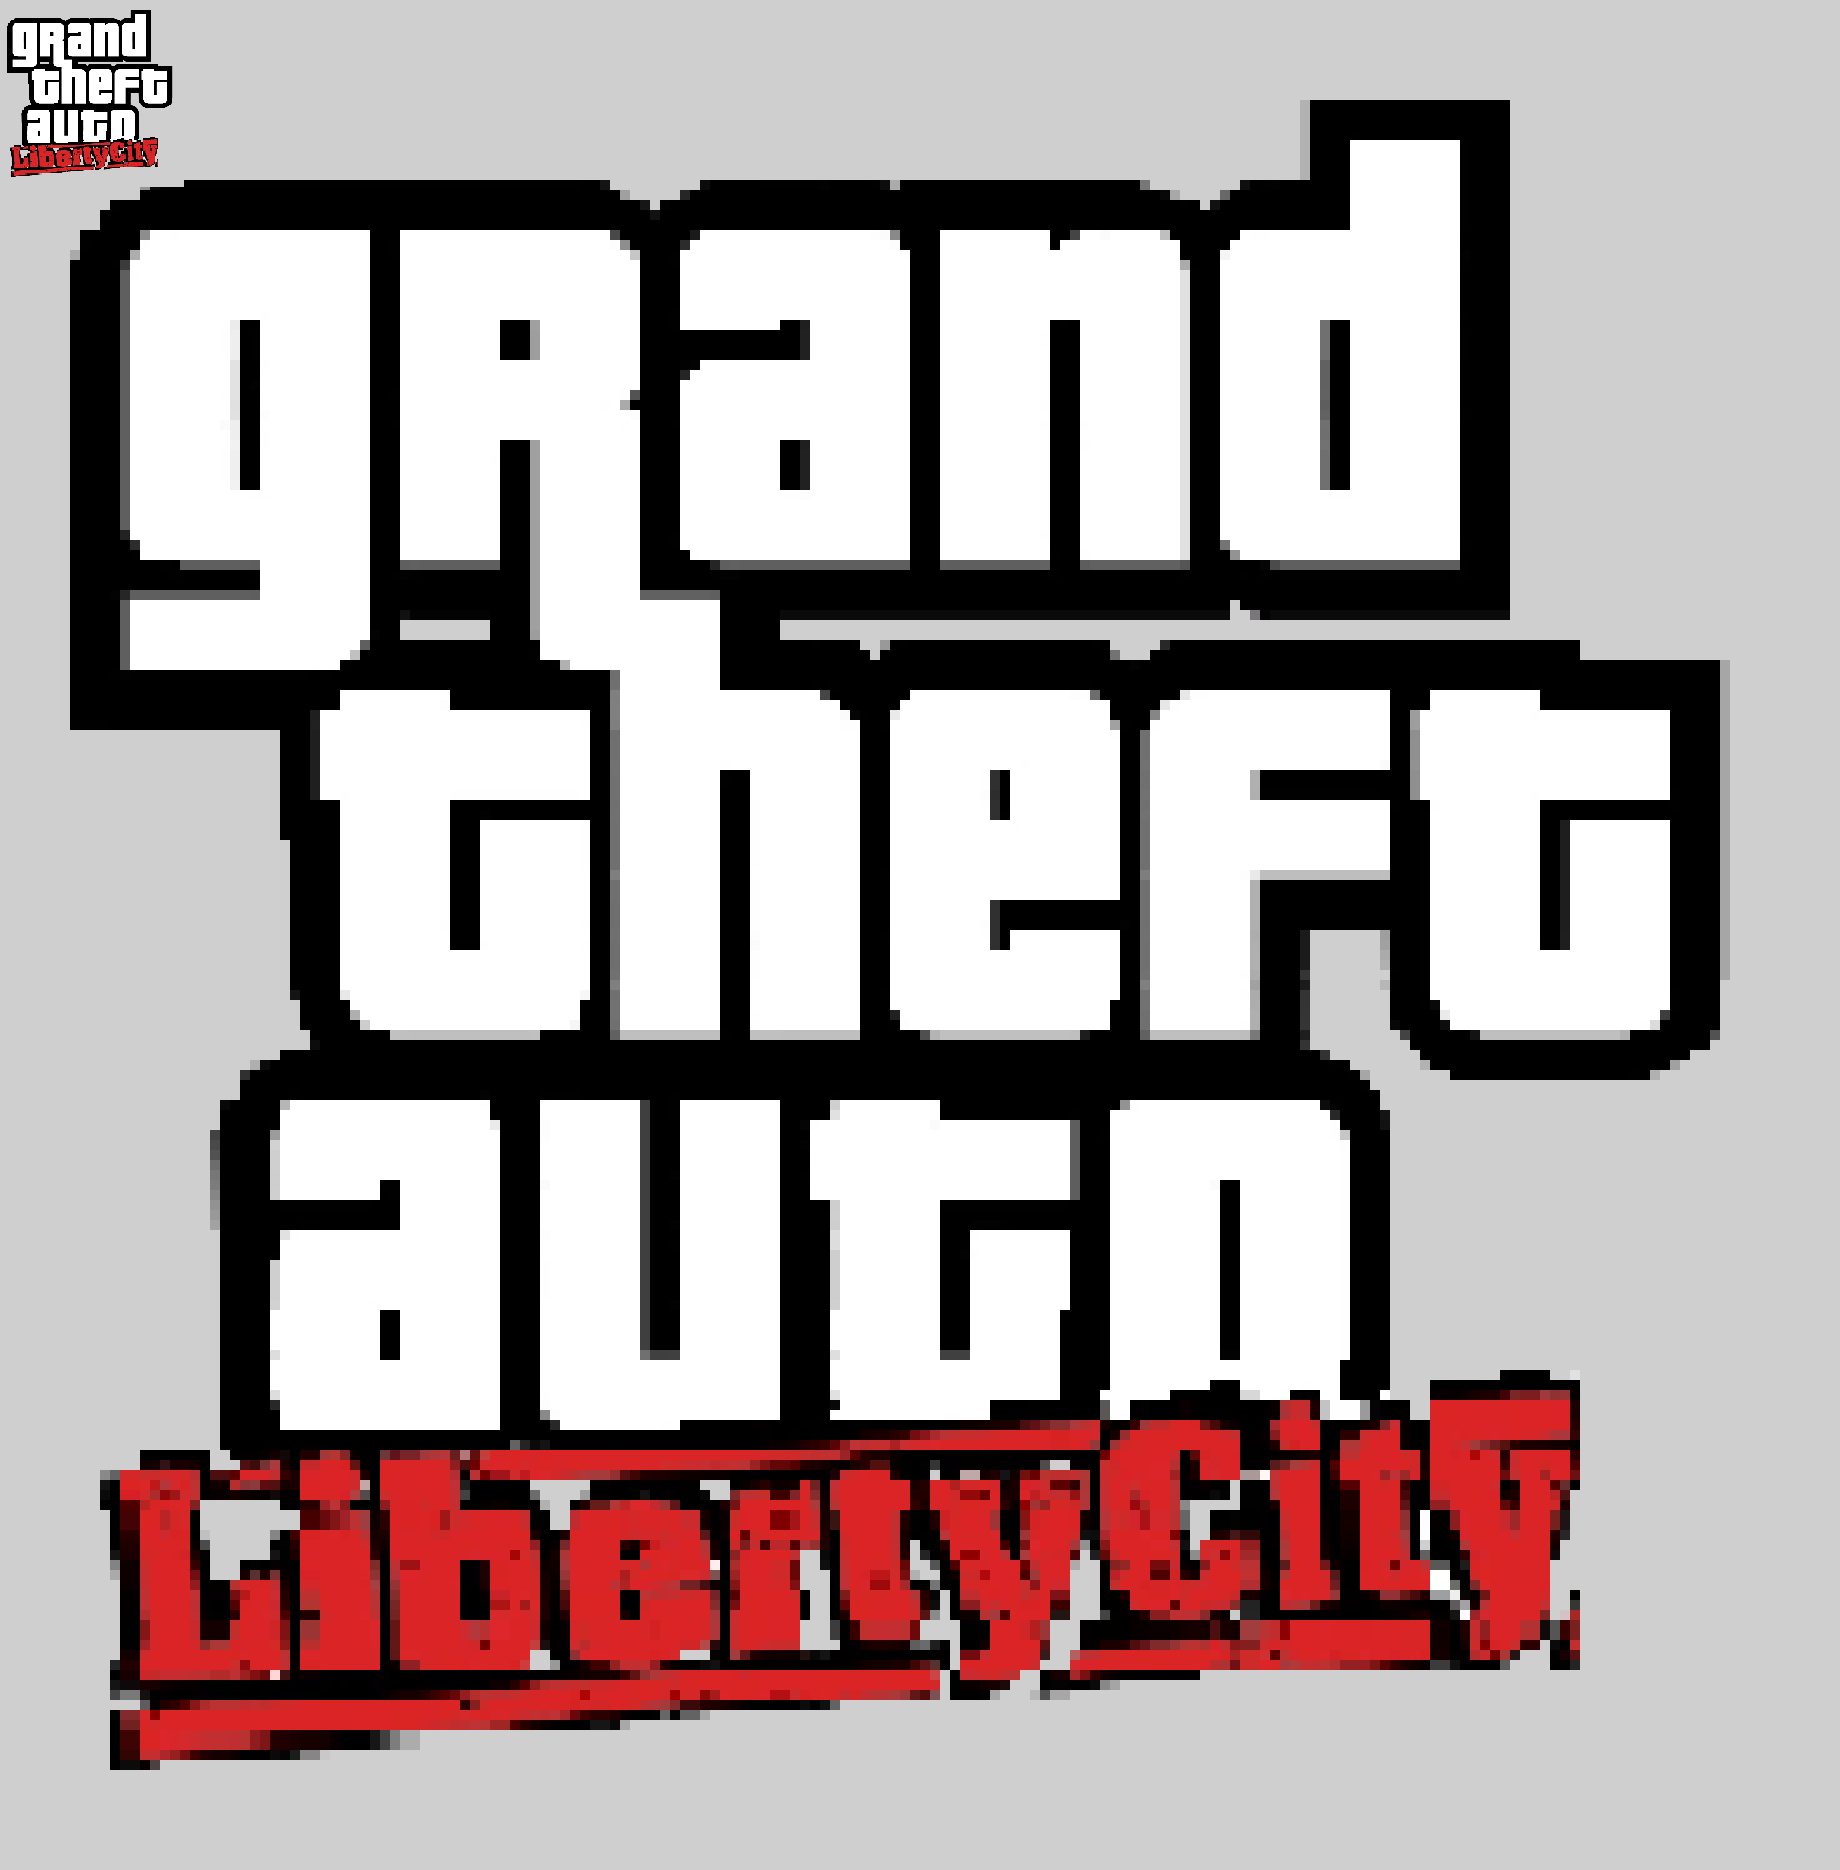 Grand Theft Auto Liberty City Stories Folder Icon by ans0sama on DeviantArt